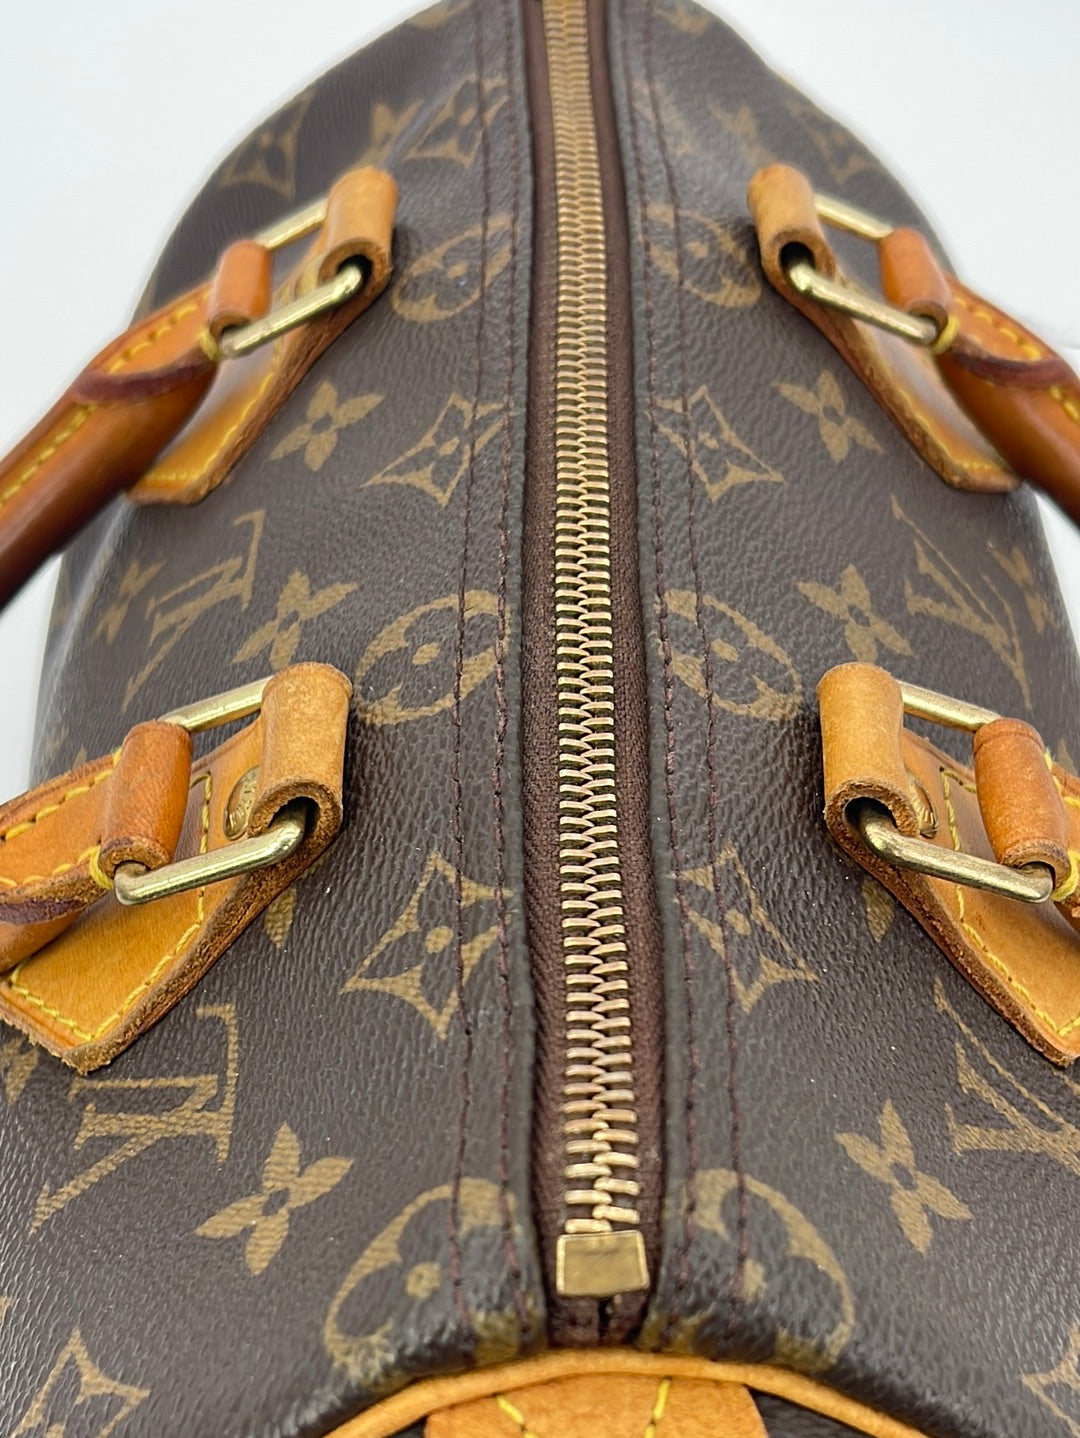 Louis Vuitton Classic Monogram Canvas Speedy 25 Top Handle Bag